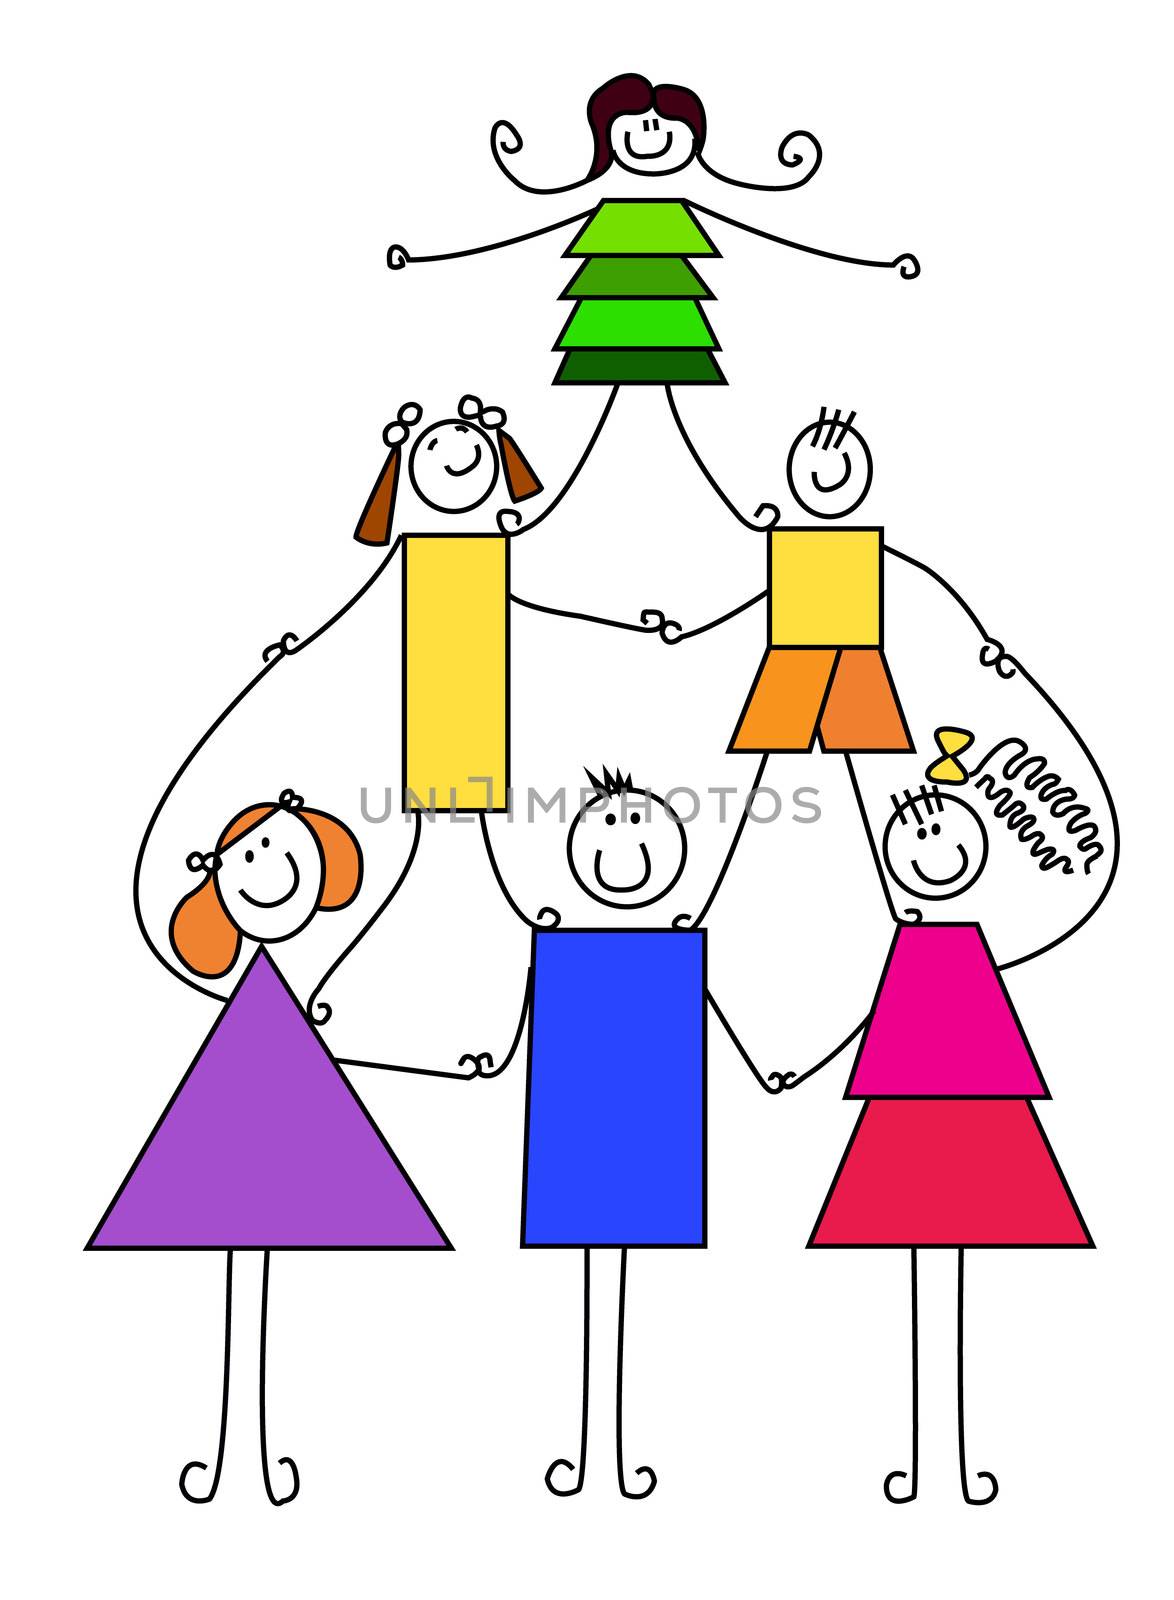 children pyramid by Dr.G